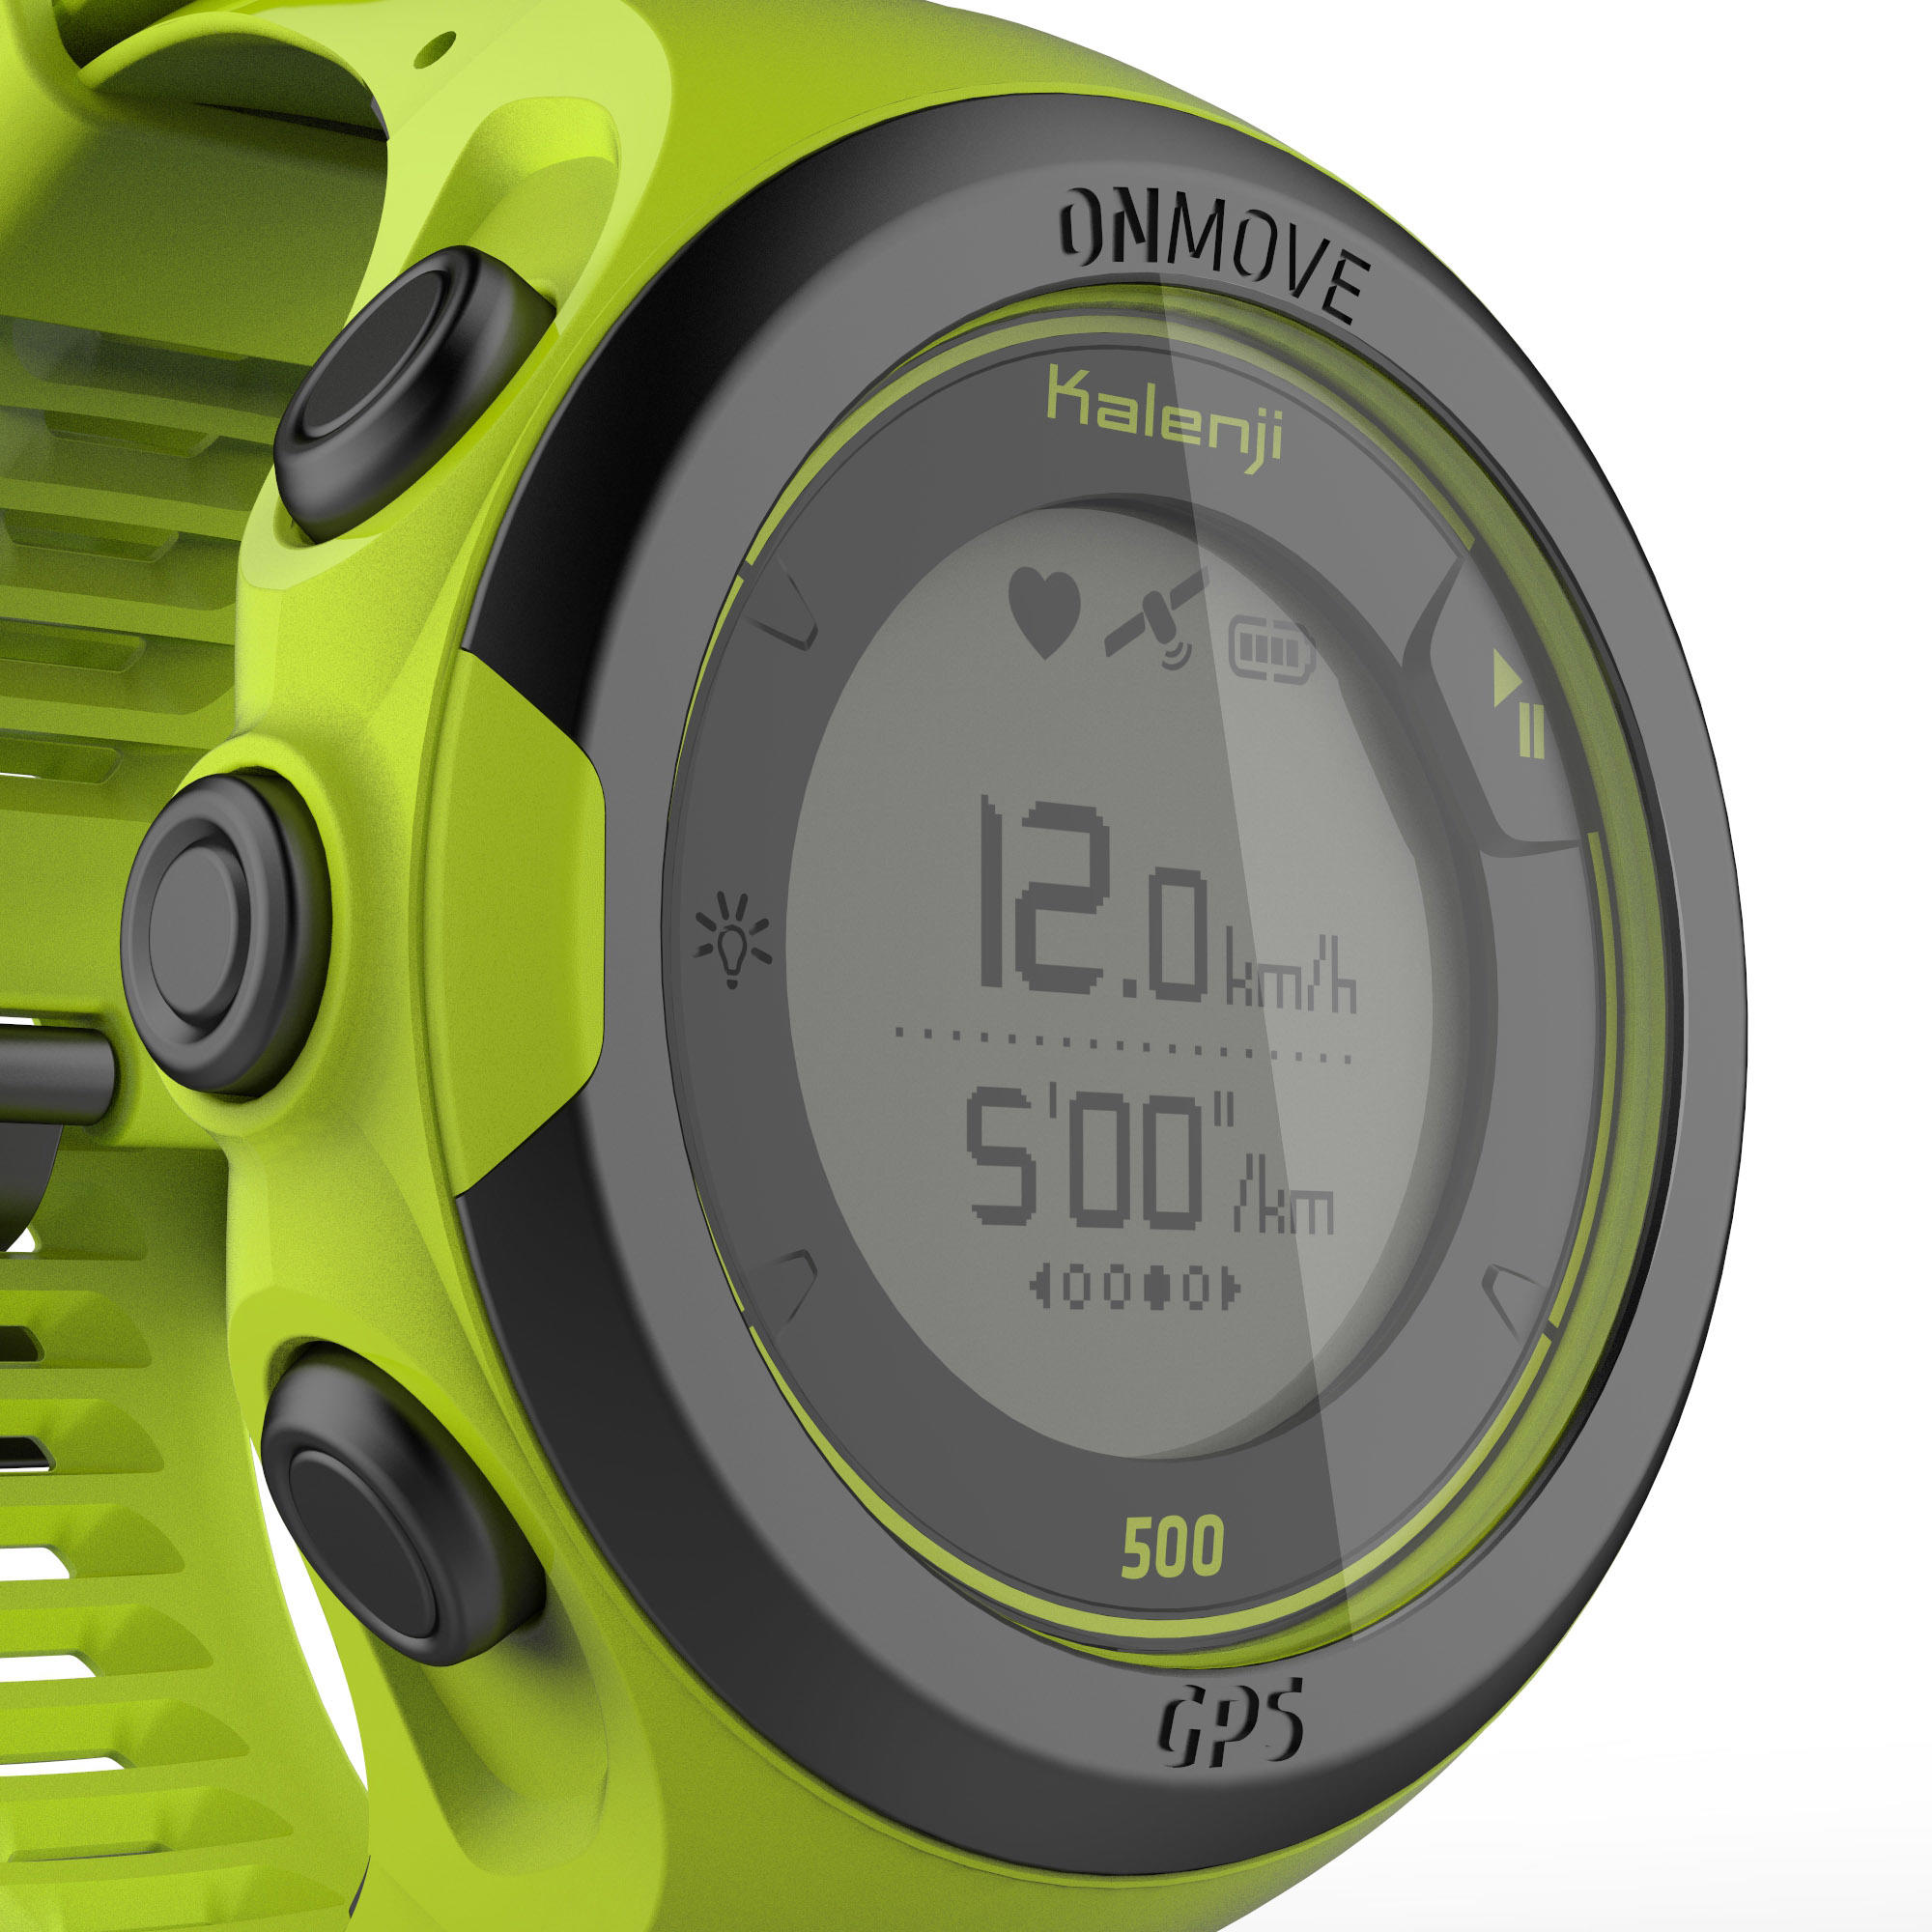 ONmove 500 GPS running watch and wrist heart rate monitor - yellow 12/17